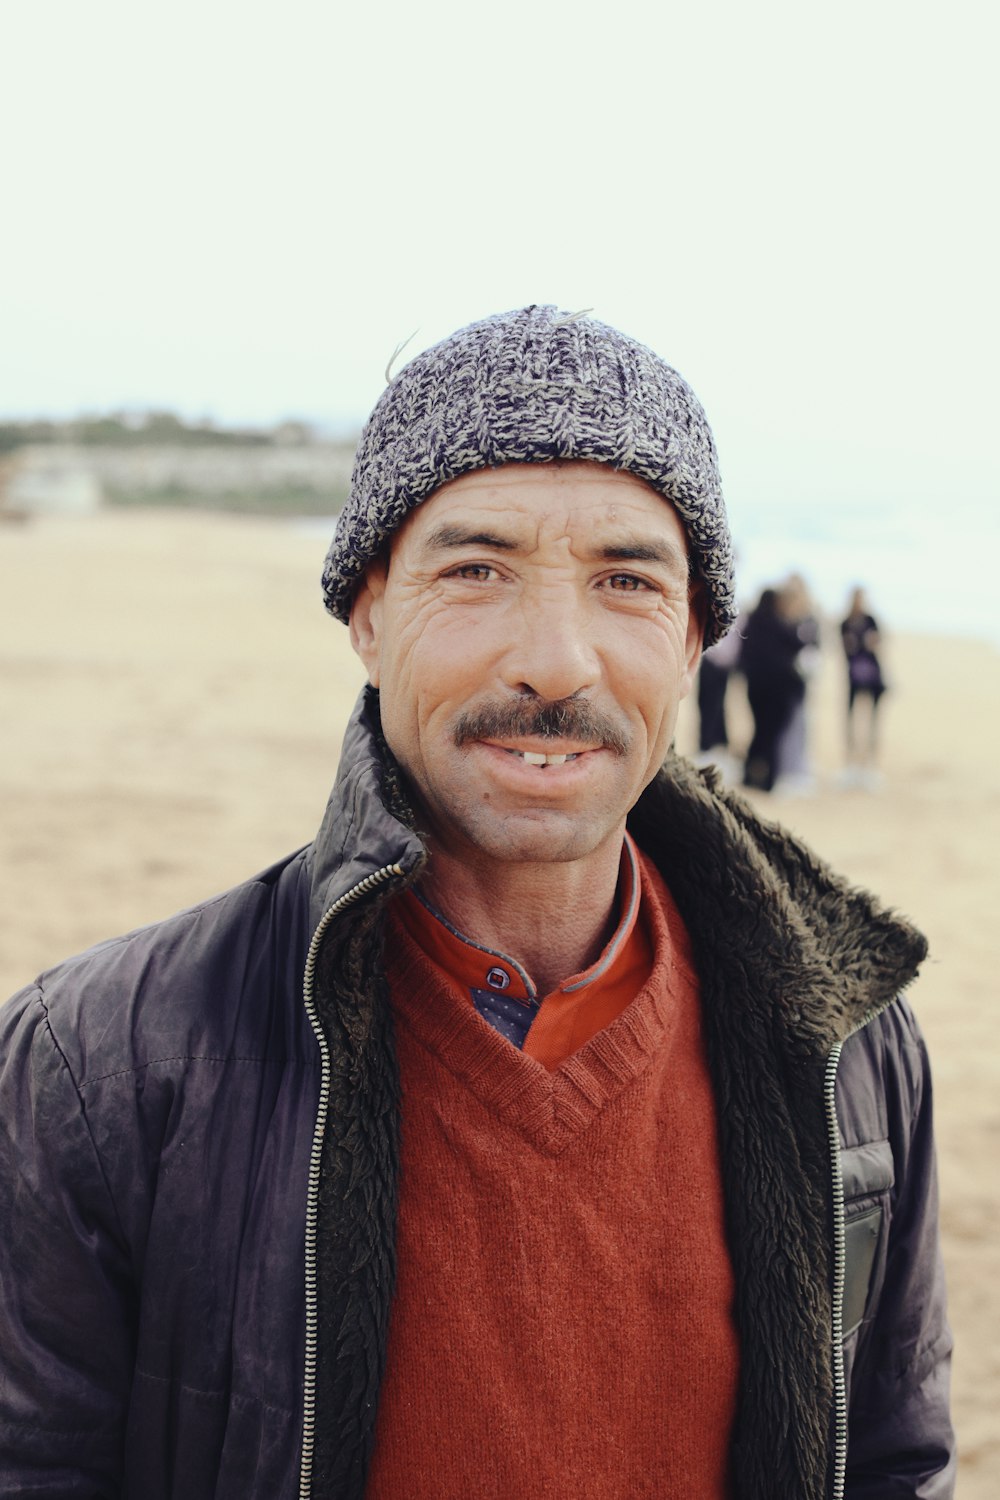 a man standing on a beach wearing a hat